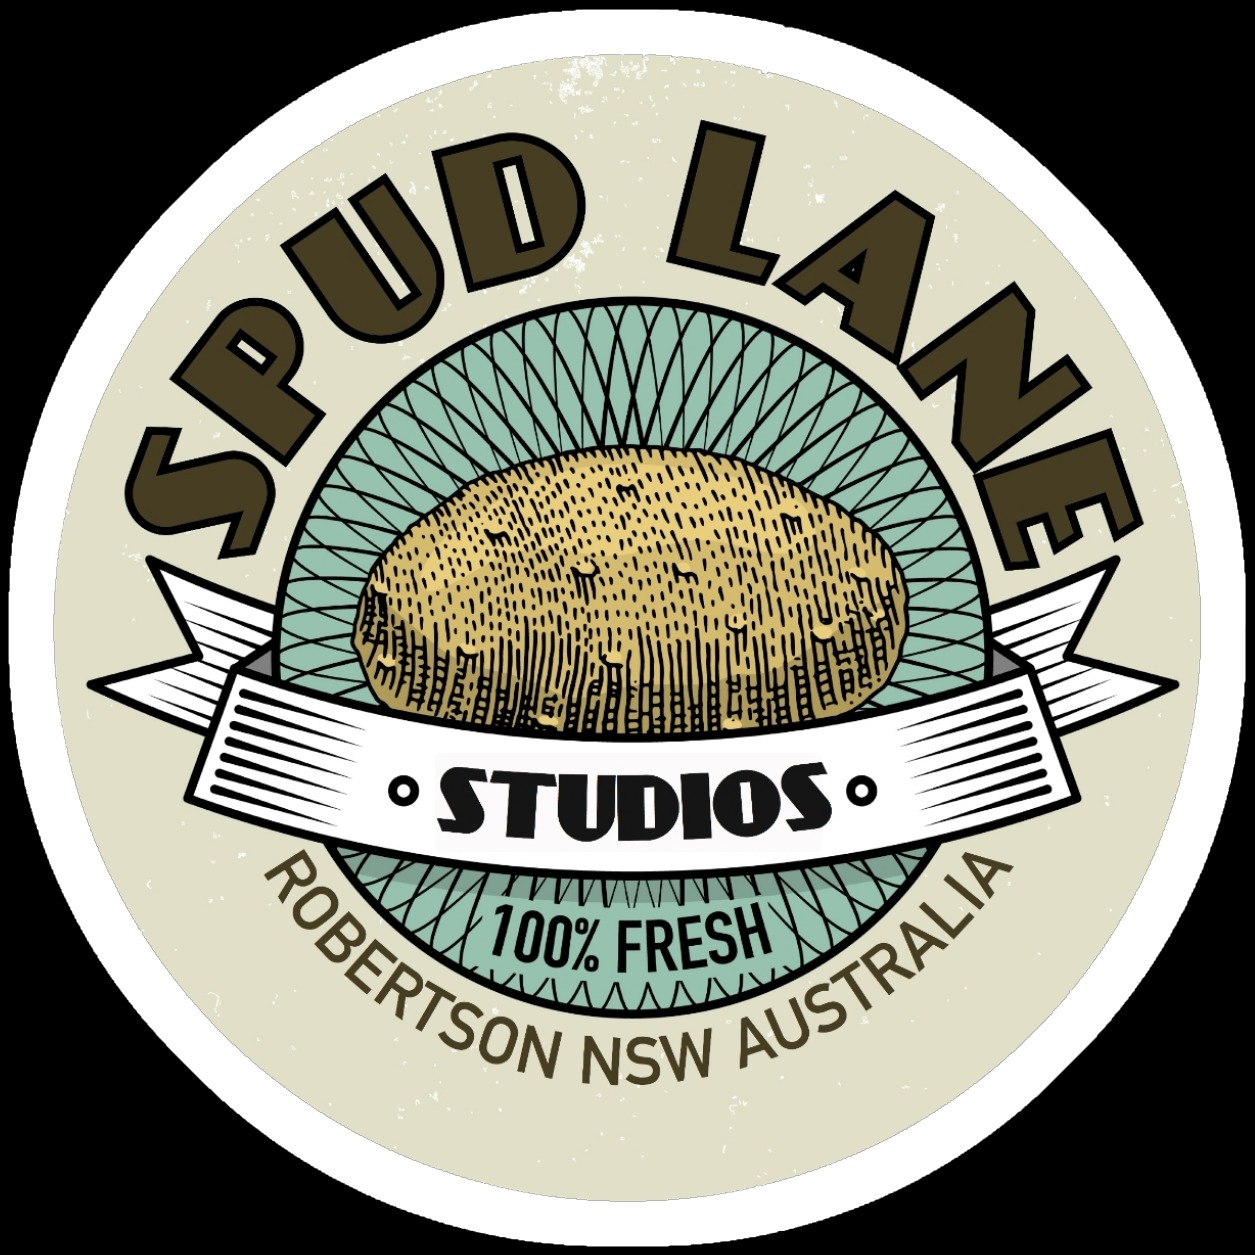 Spud Lane Studios Wingecarribee